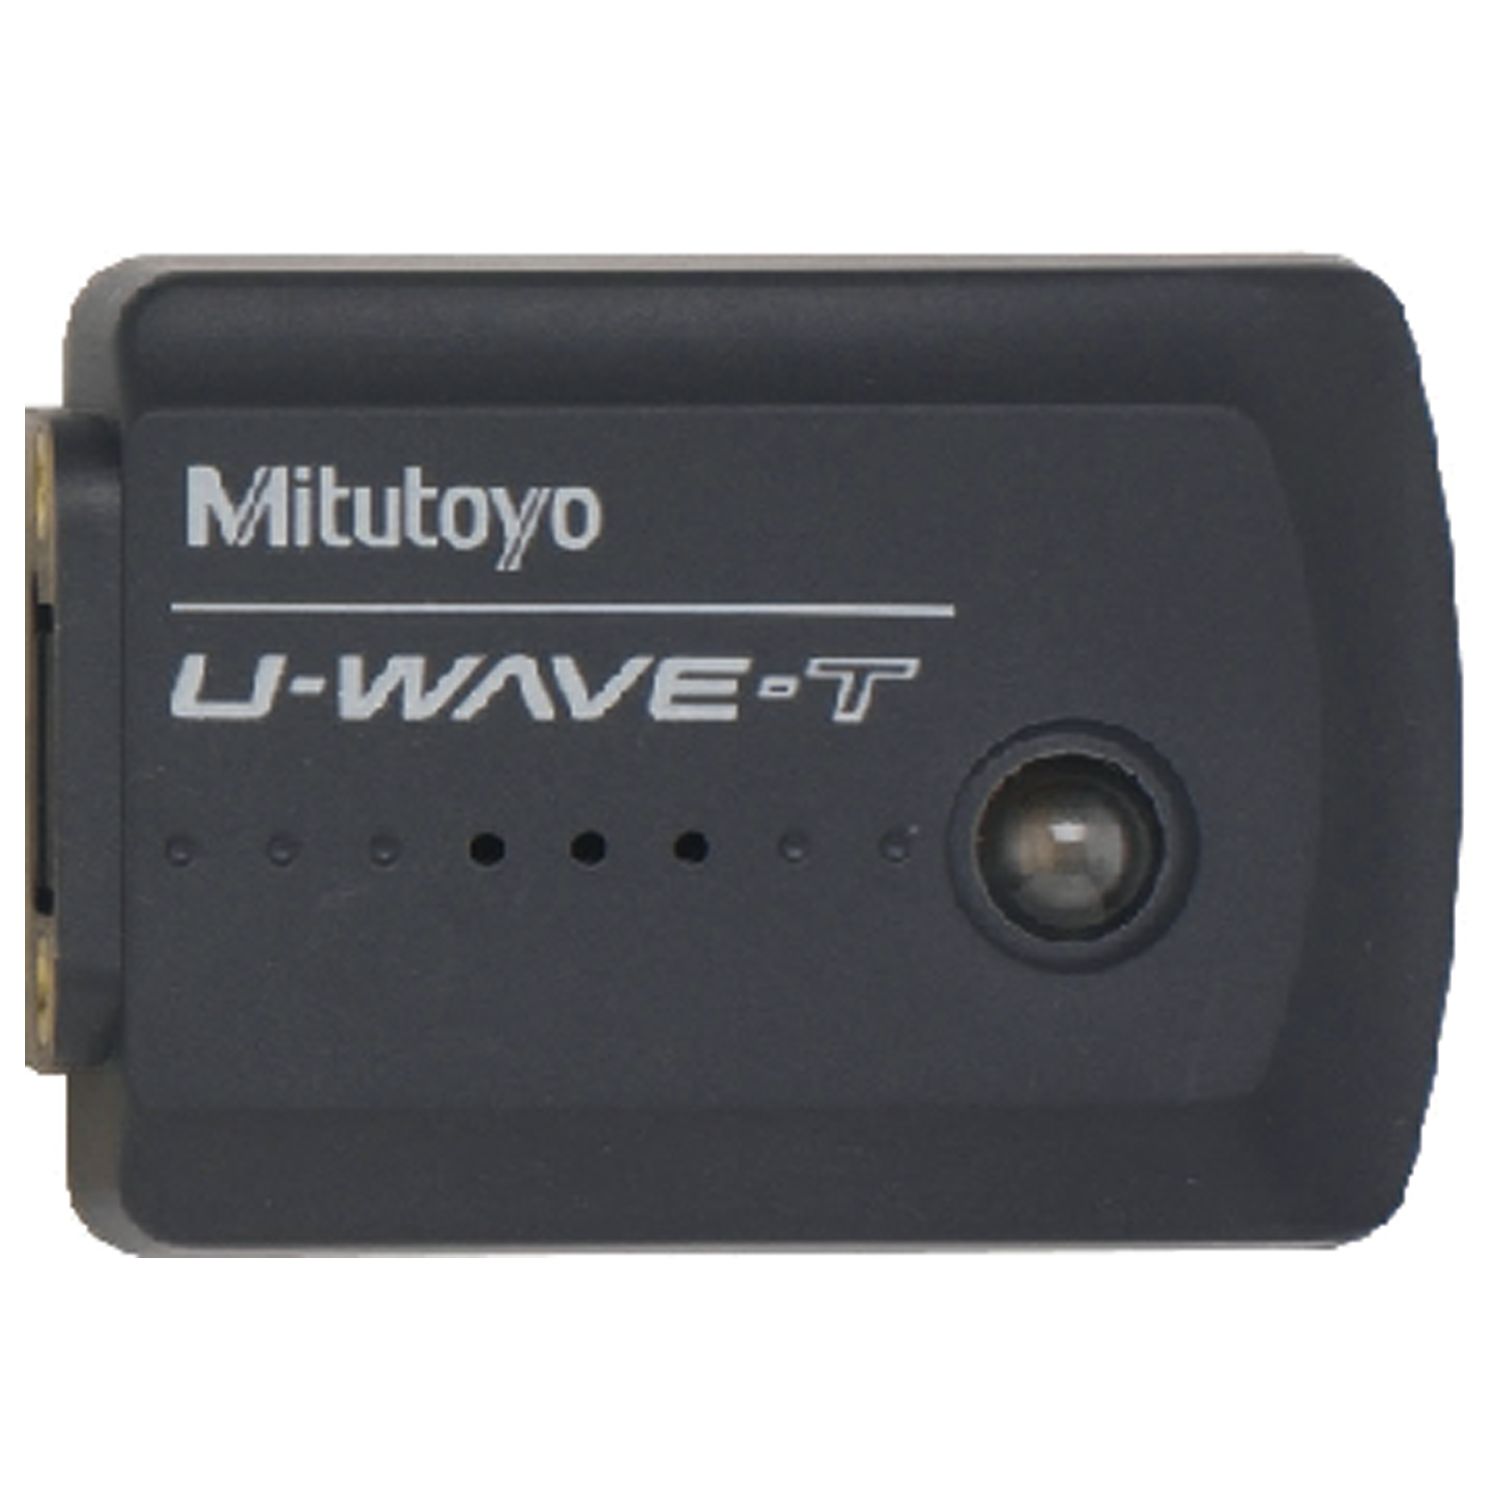 Mitutoyo U-Wave Wireless Transmitter (Buzzer model) 44mm x 29.5mm x 18.5mm-Mitutoyo-Tool Factory